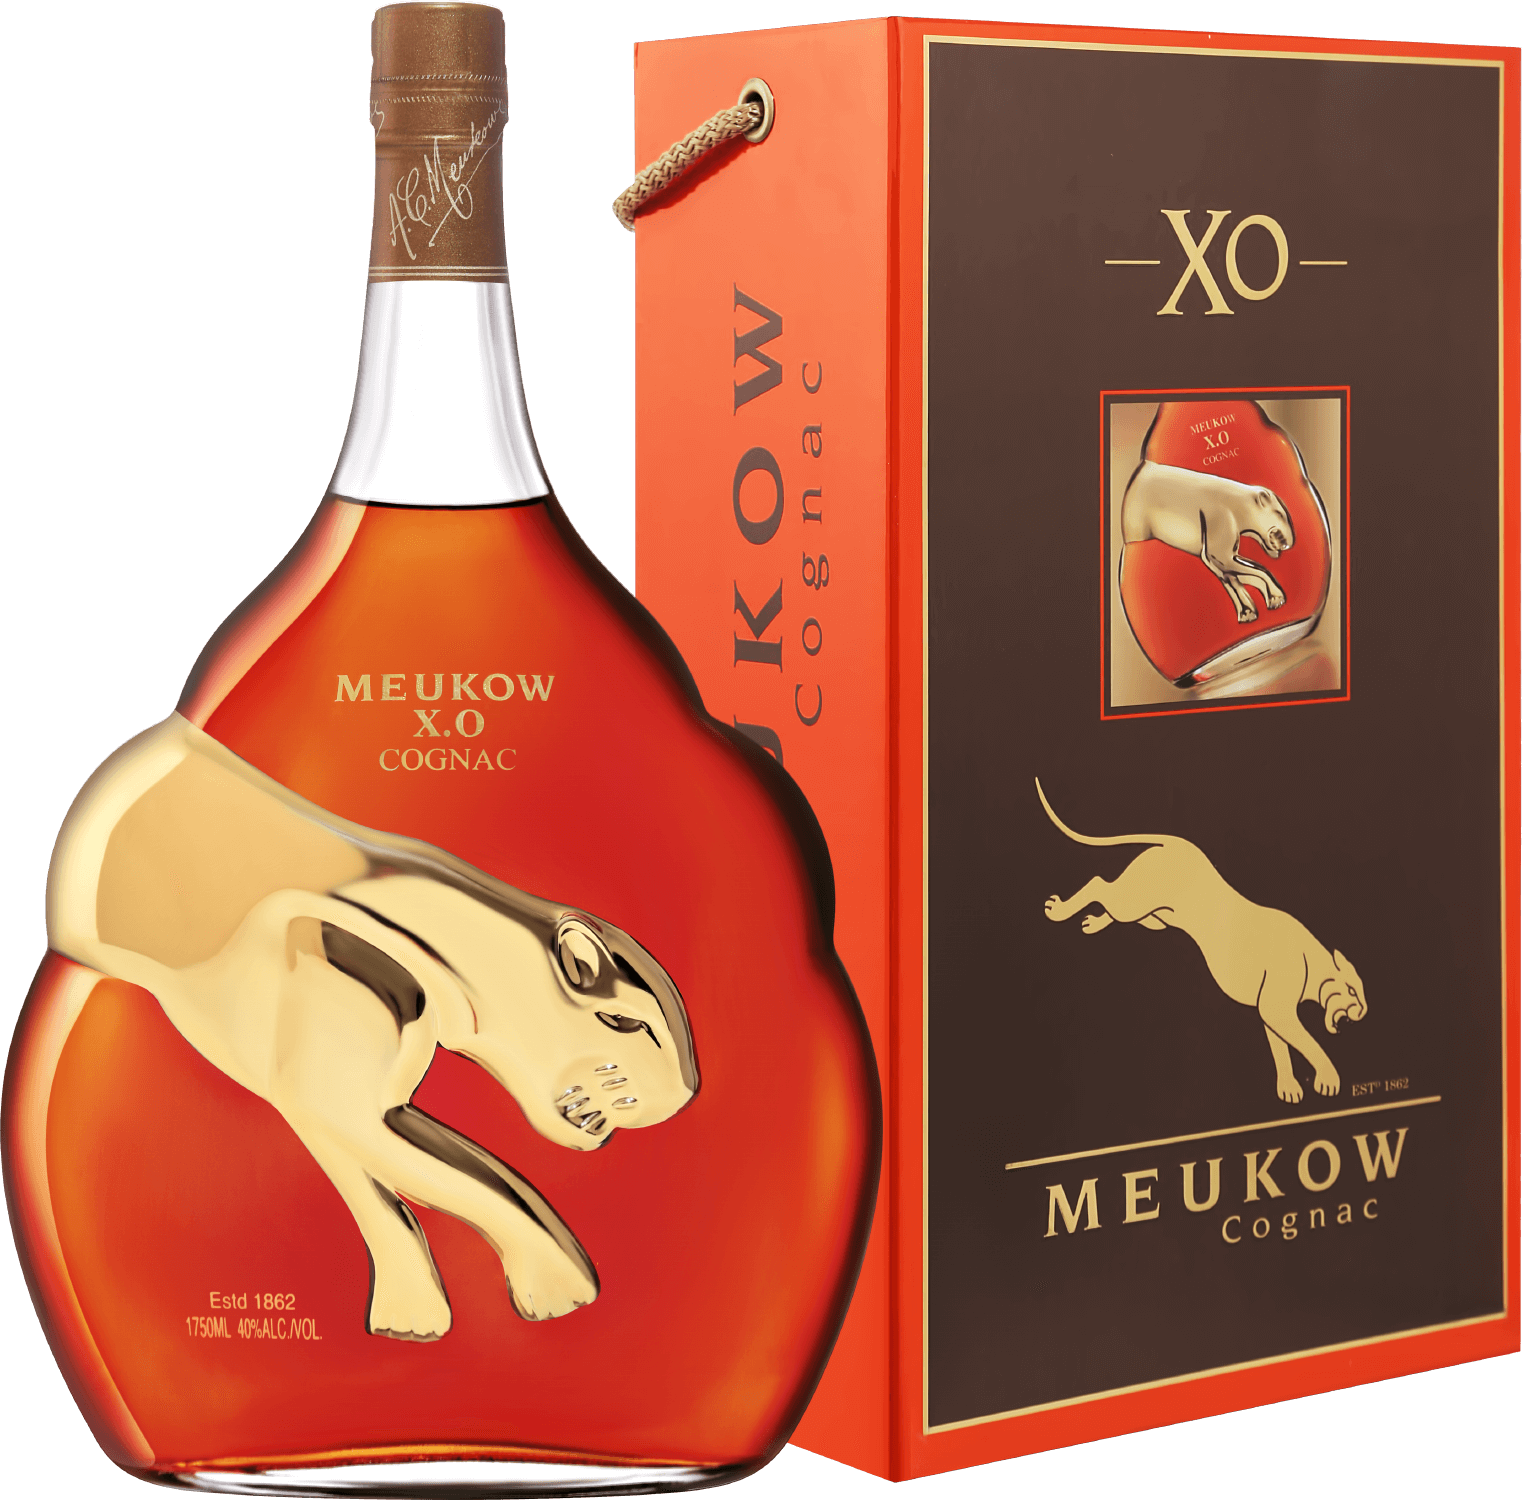 Meukow Cognac XO (gift box) cognac lautrec heritage supreme gift box